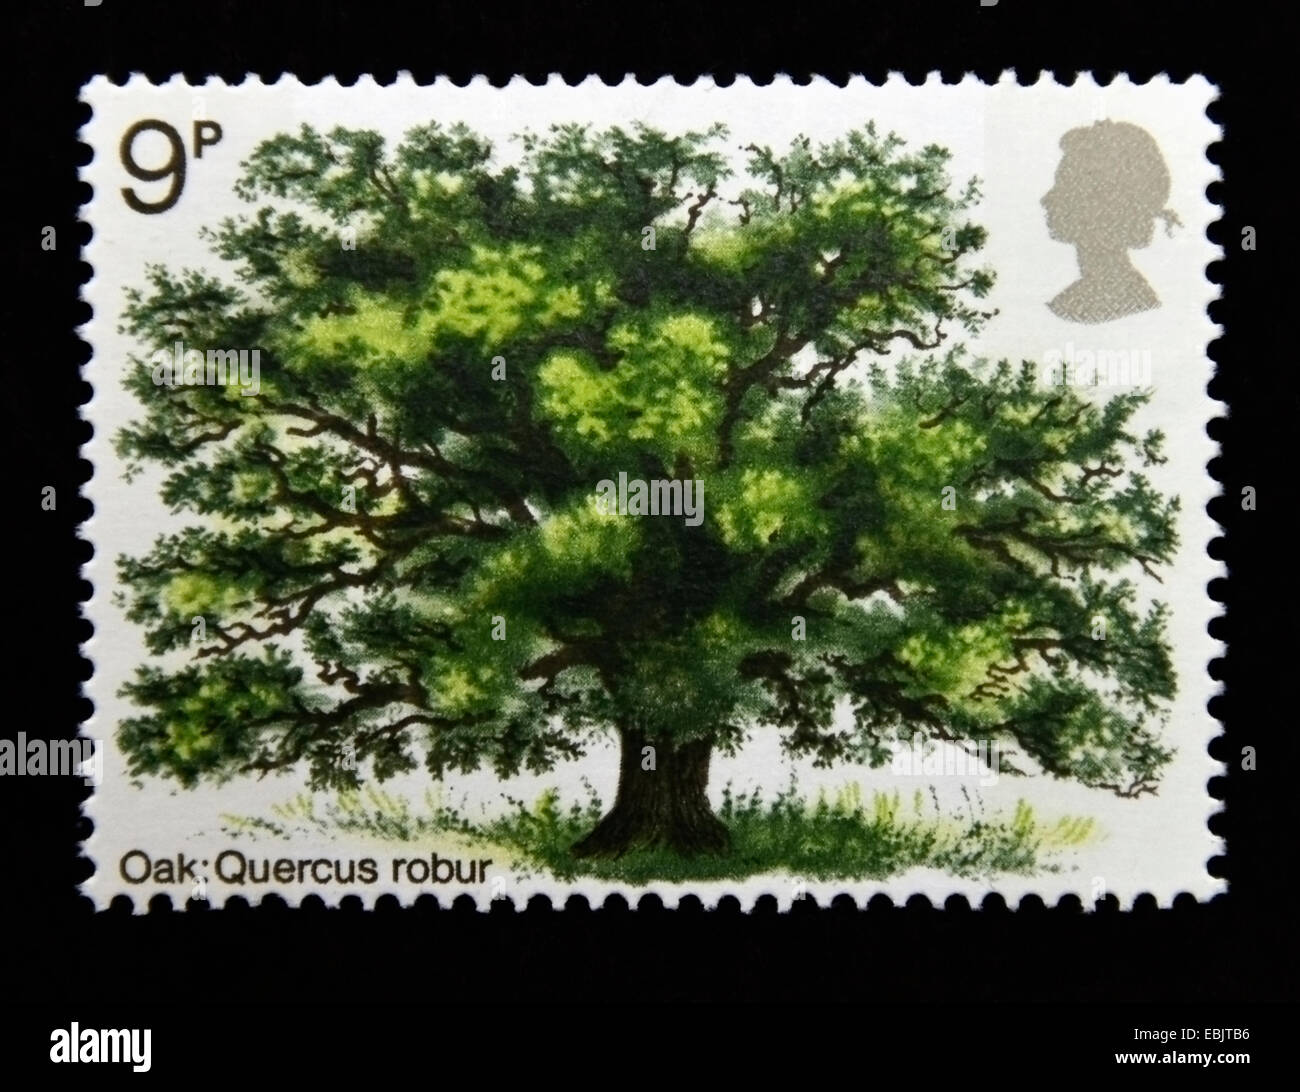 Postage stamp. Great Britain. Queen Elizabeth II. Tree Planting Year. British Trees. 1973. Oak, Quercus robur. 9p. Stock Photo